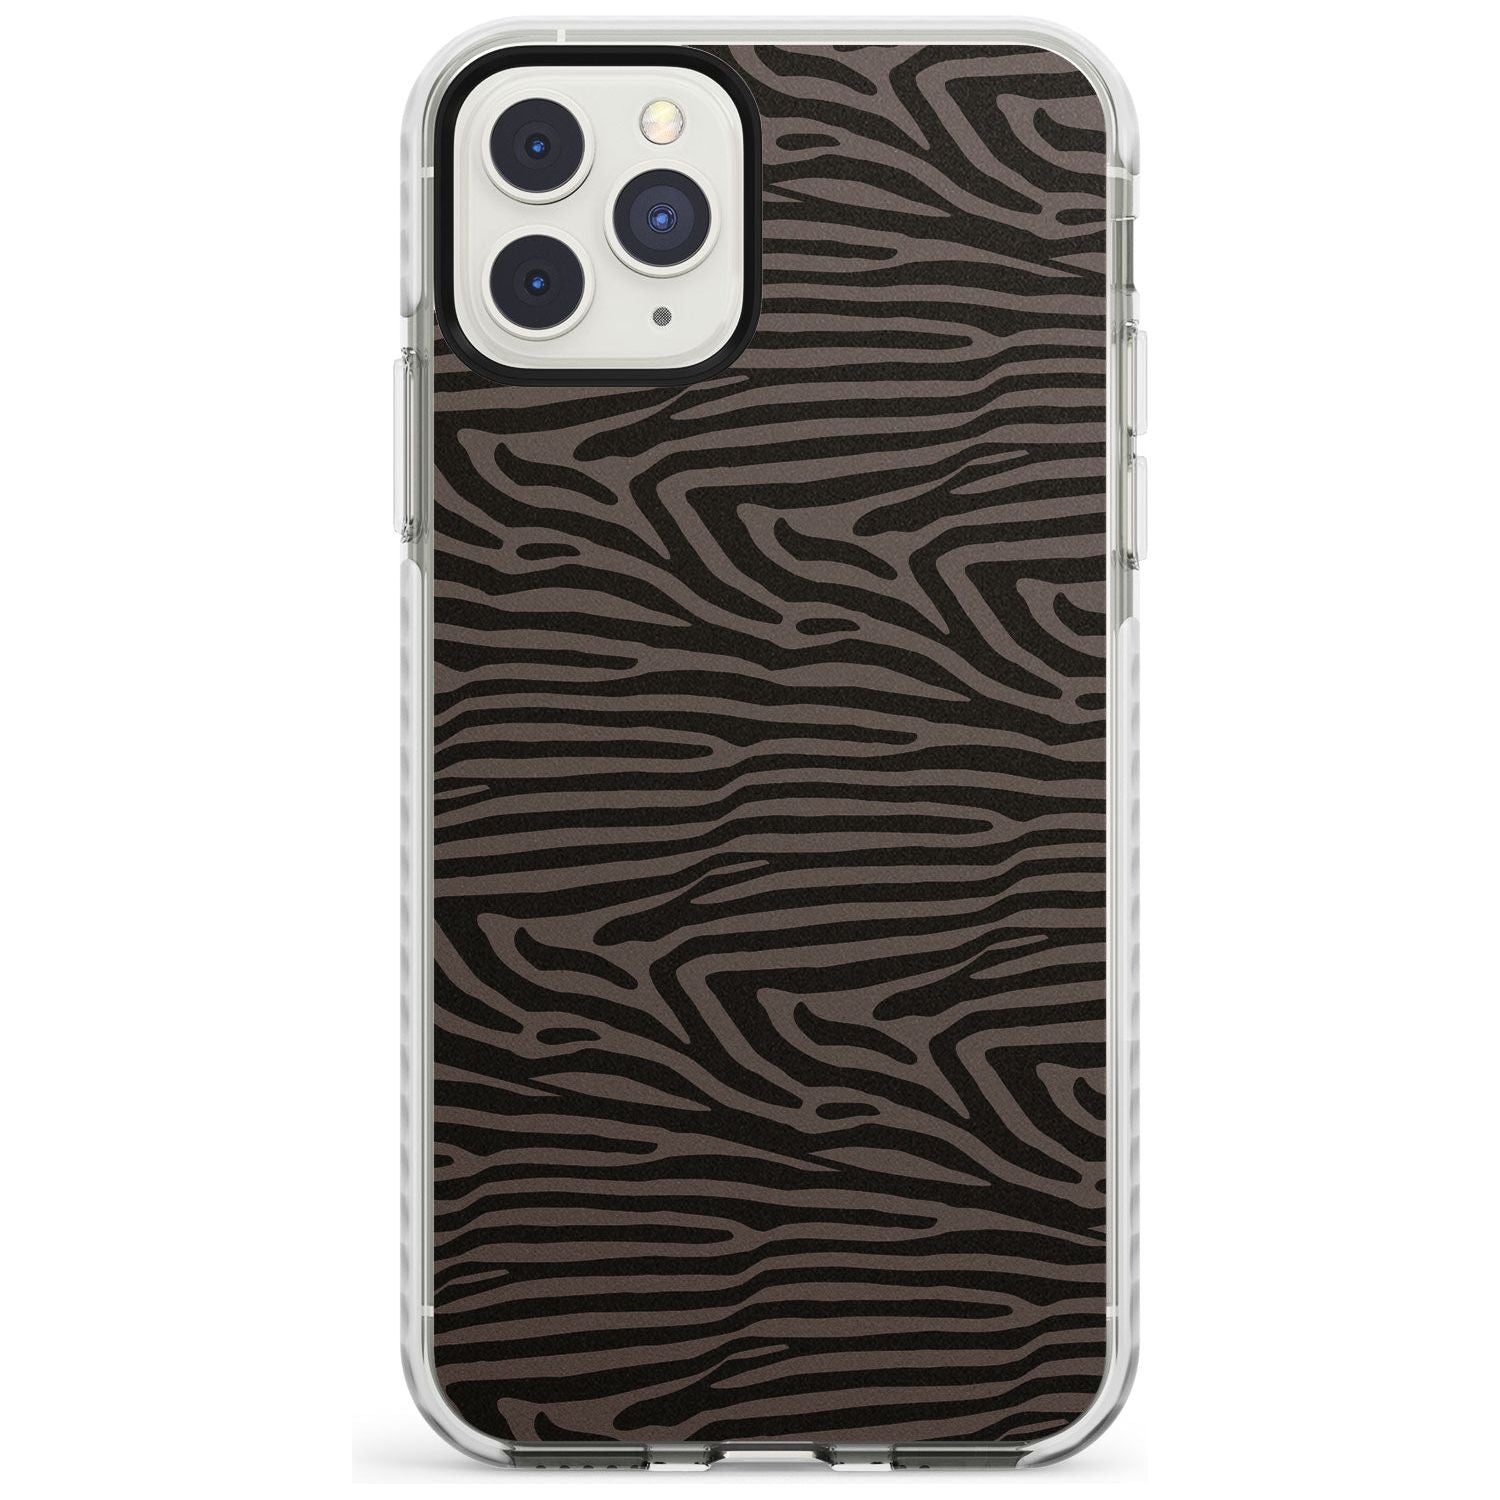 Dark Animal Print Pattern Zebra Impact Phone Case for iPhone 11 Pro Max